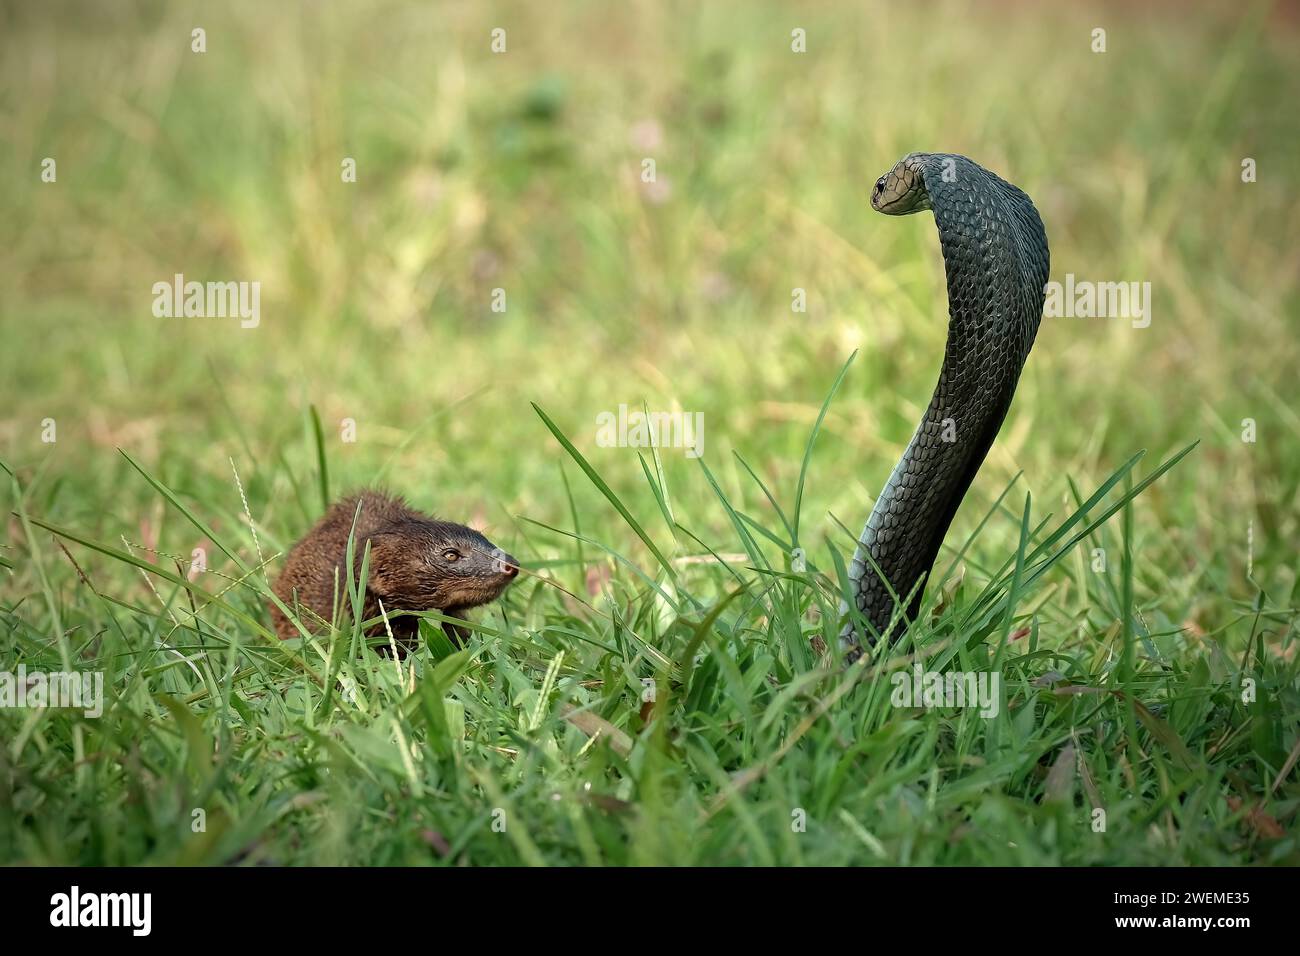 Mongoose and Naja snake on the grass Stock Photo